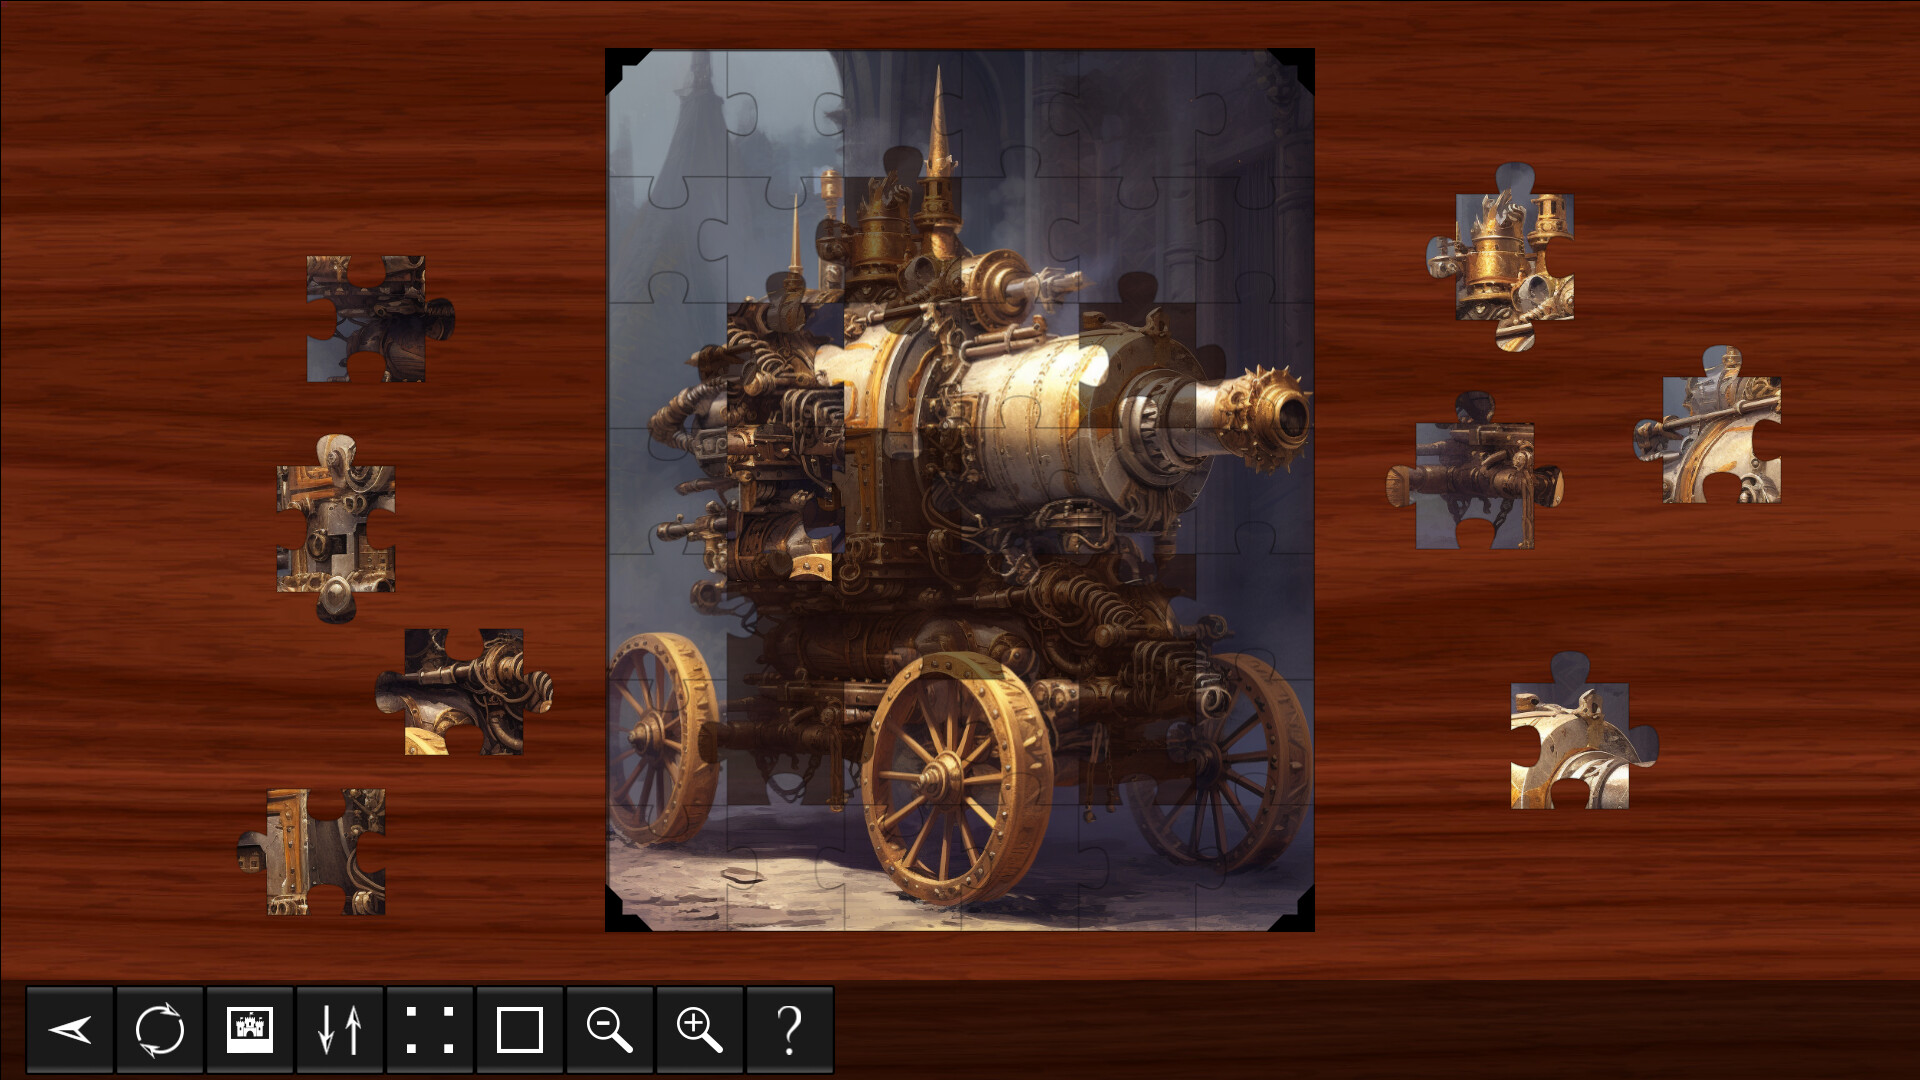 Steampunk Jigsaw Puzzles - The Great Battle Featured Screenshot #1